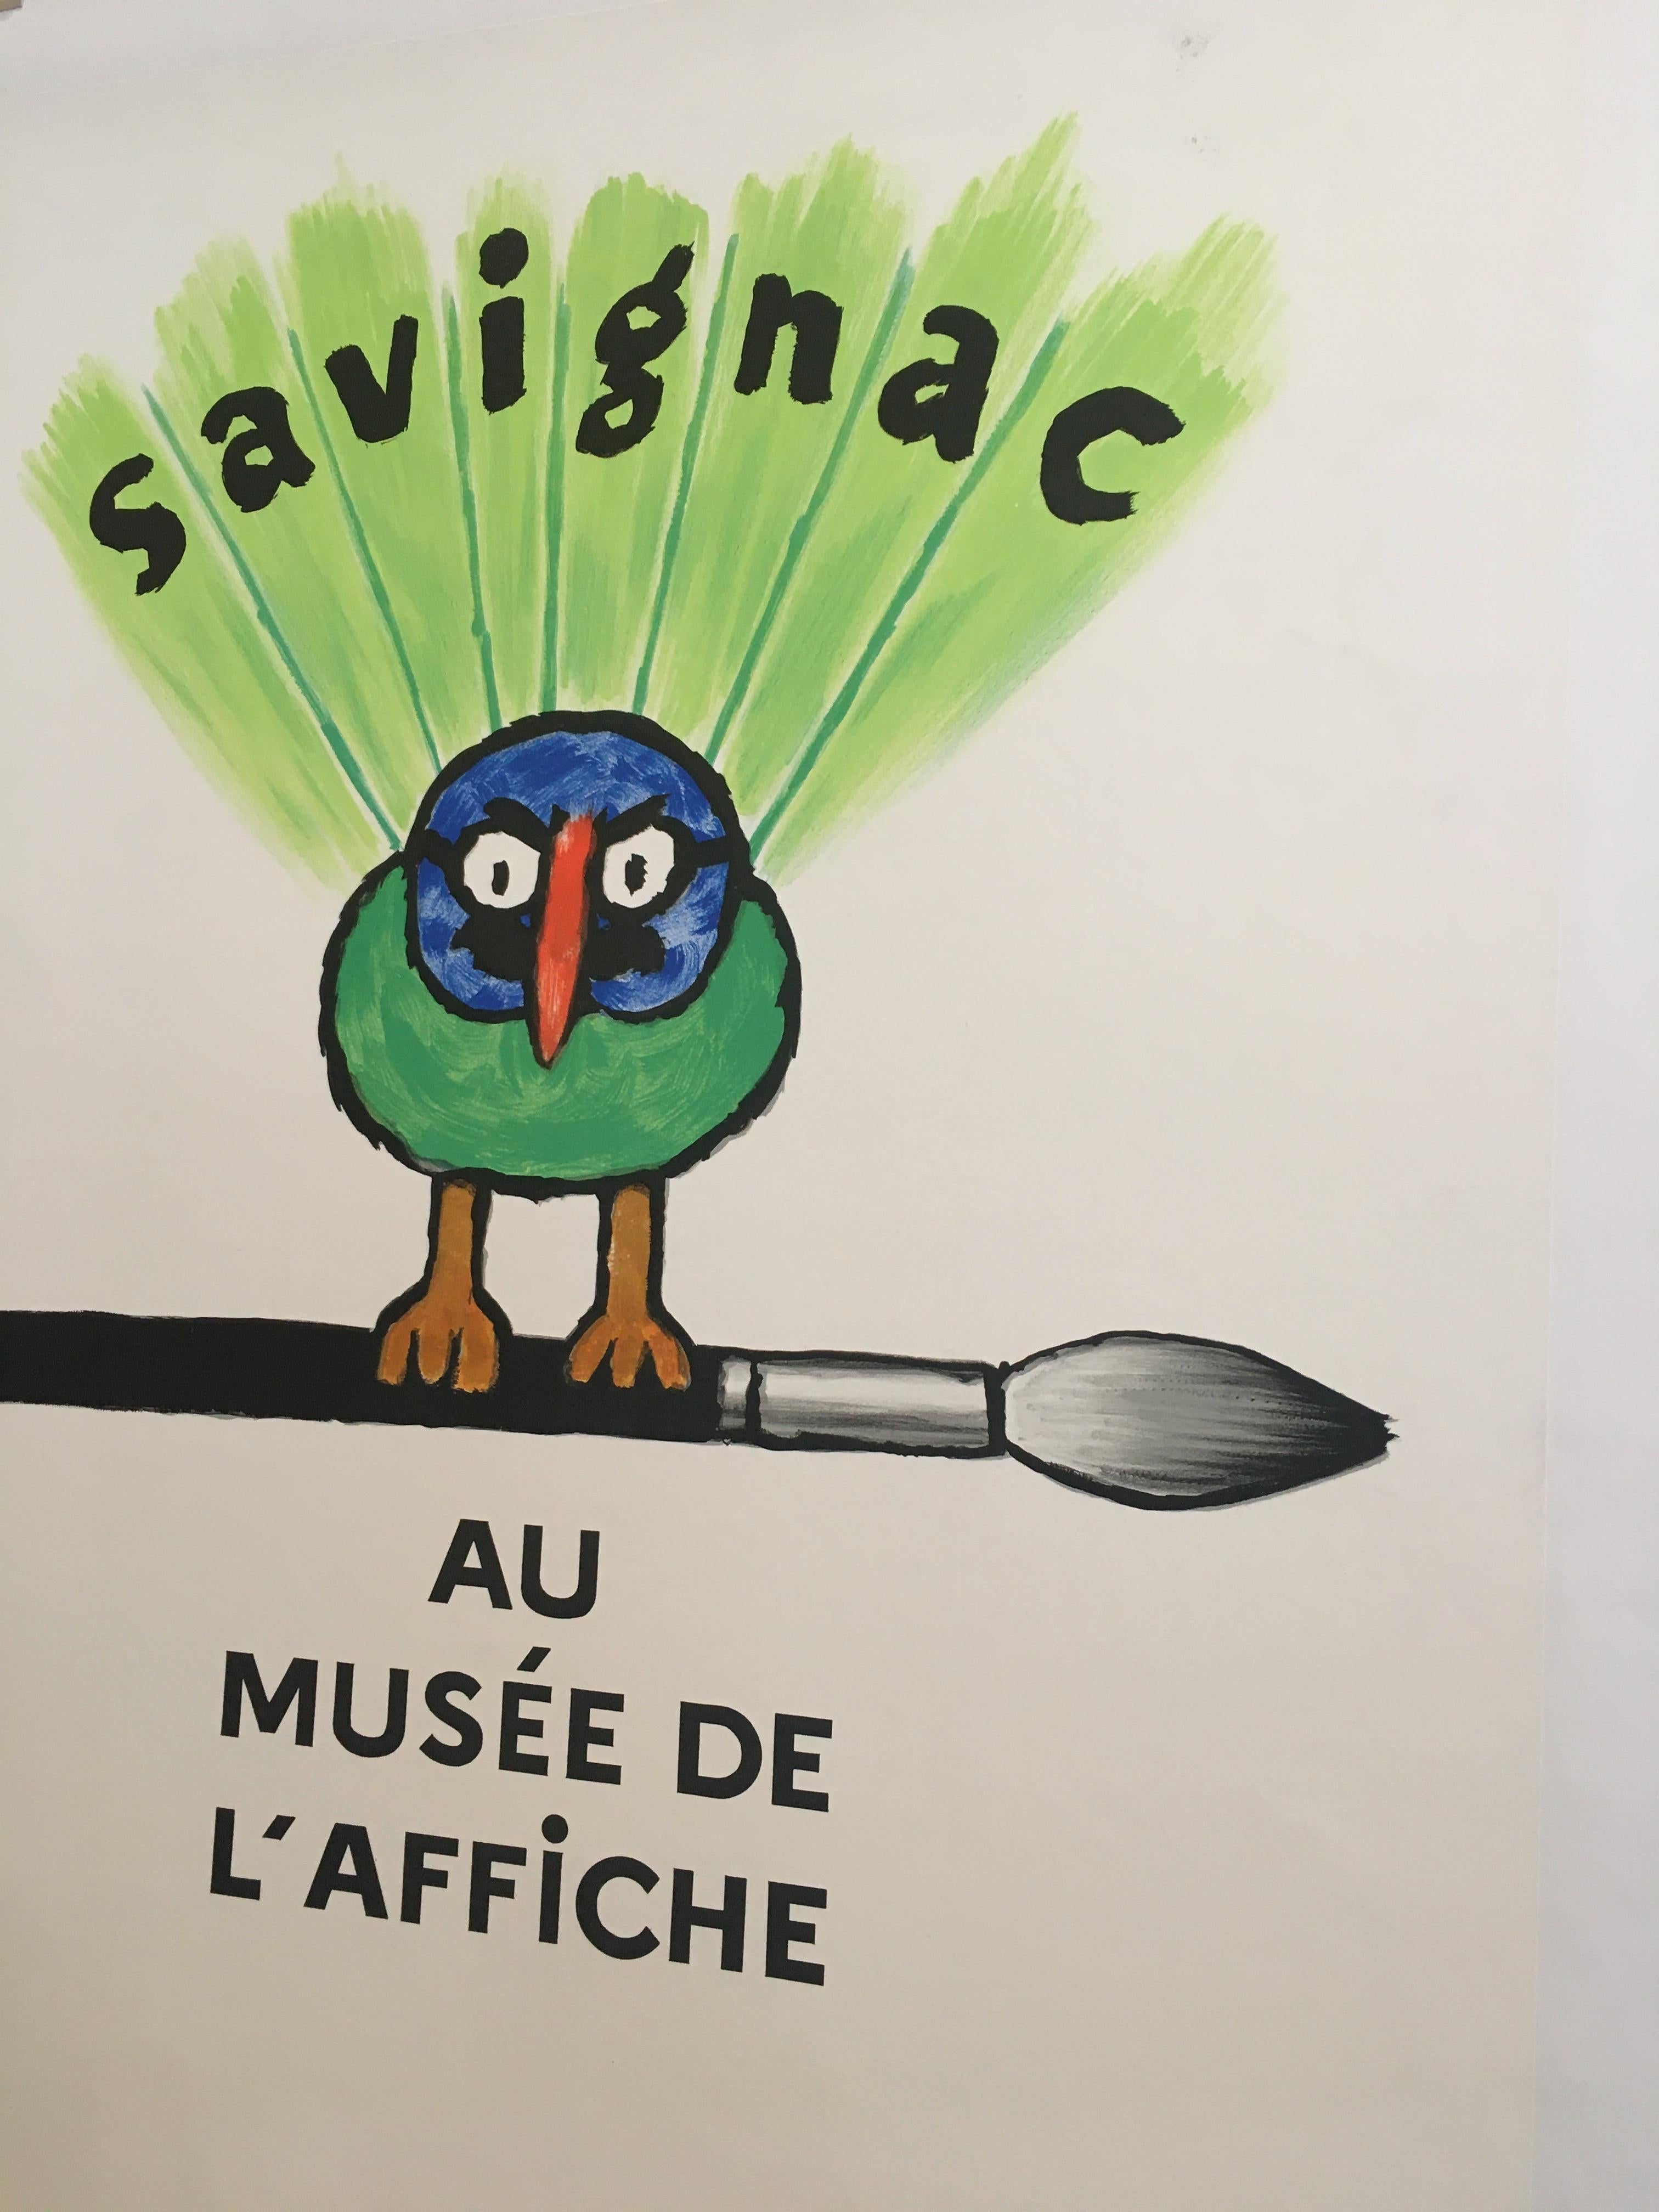 International Style Savignac Bird 'Au Musee De L’Affich' Original Vintage French Exhibition Poster For Sale